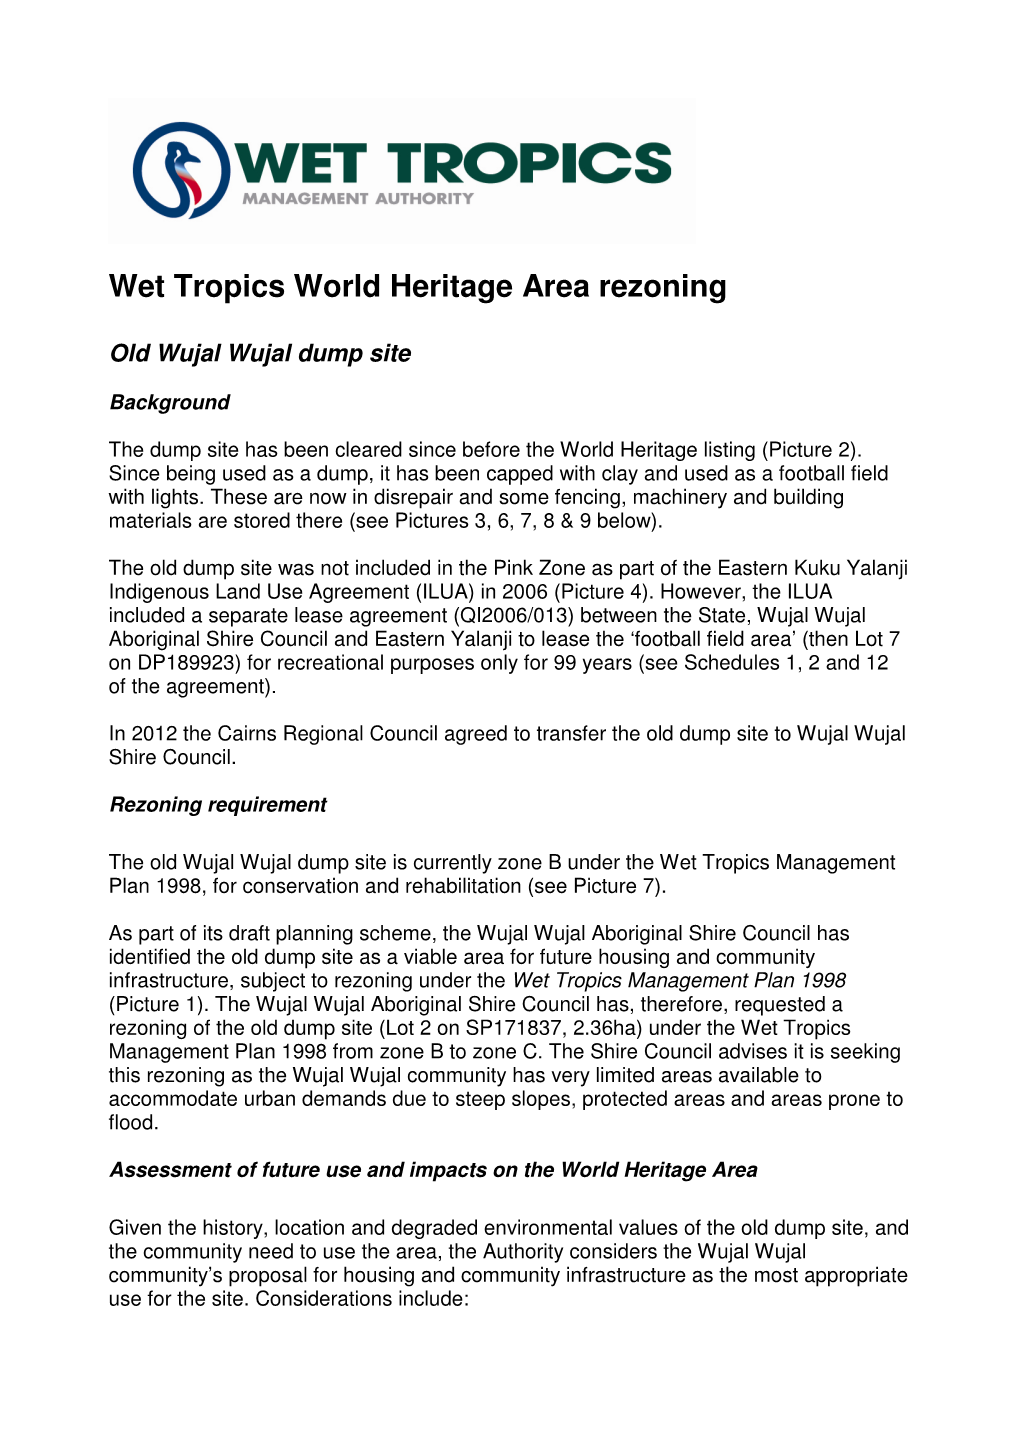 Wet Tropics World Heritage Area Rezoning